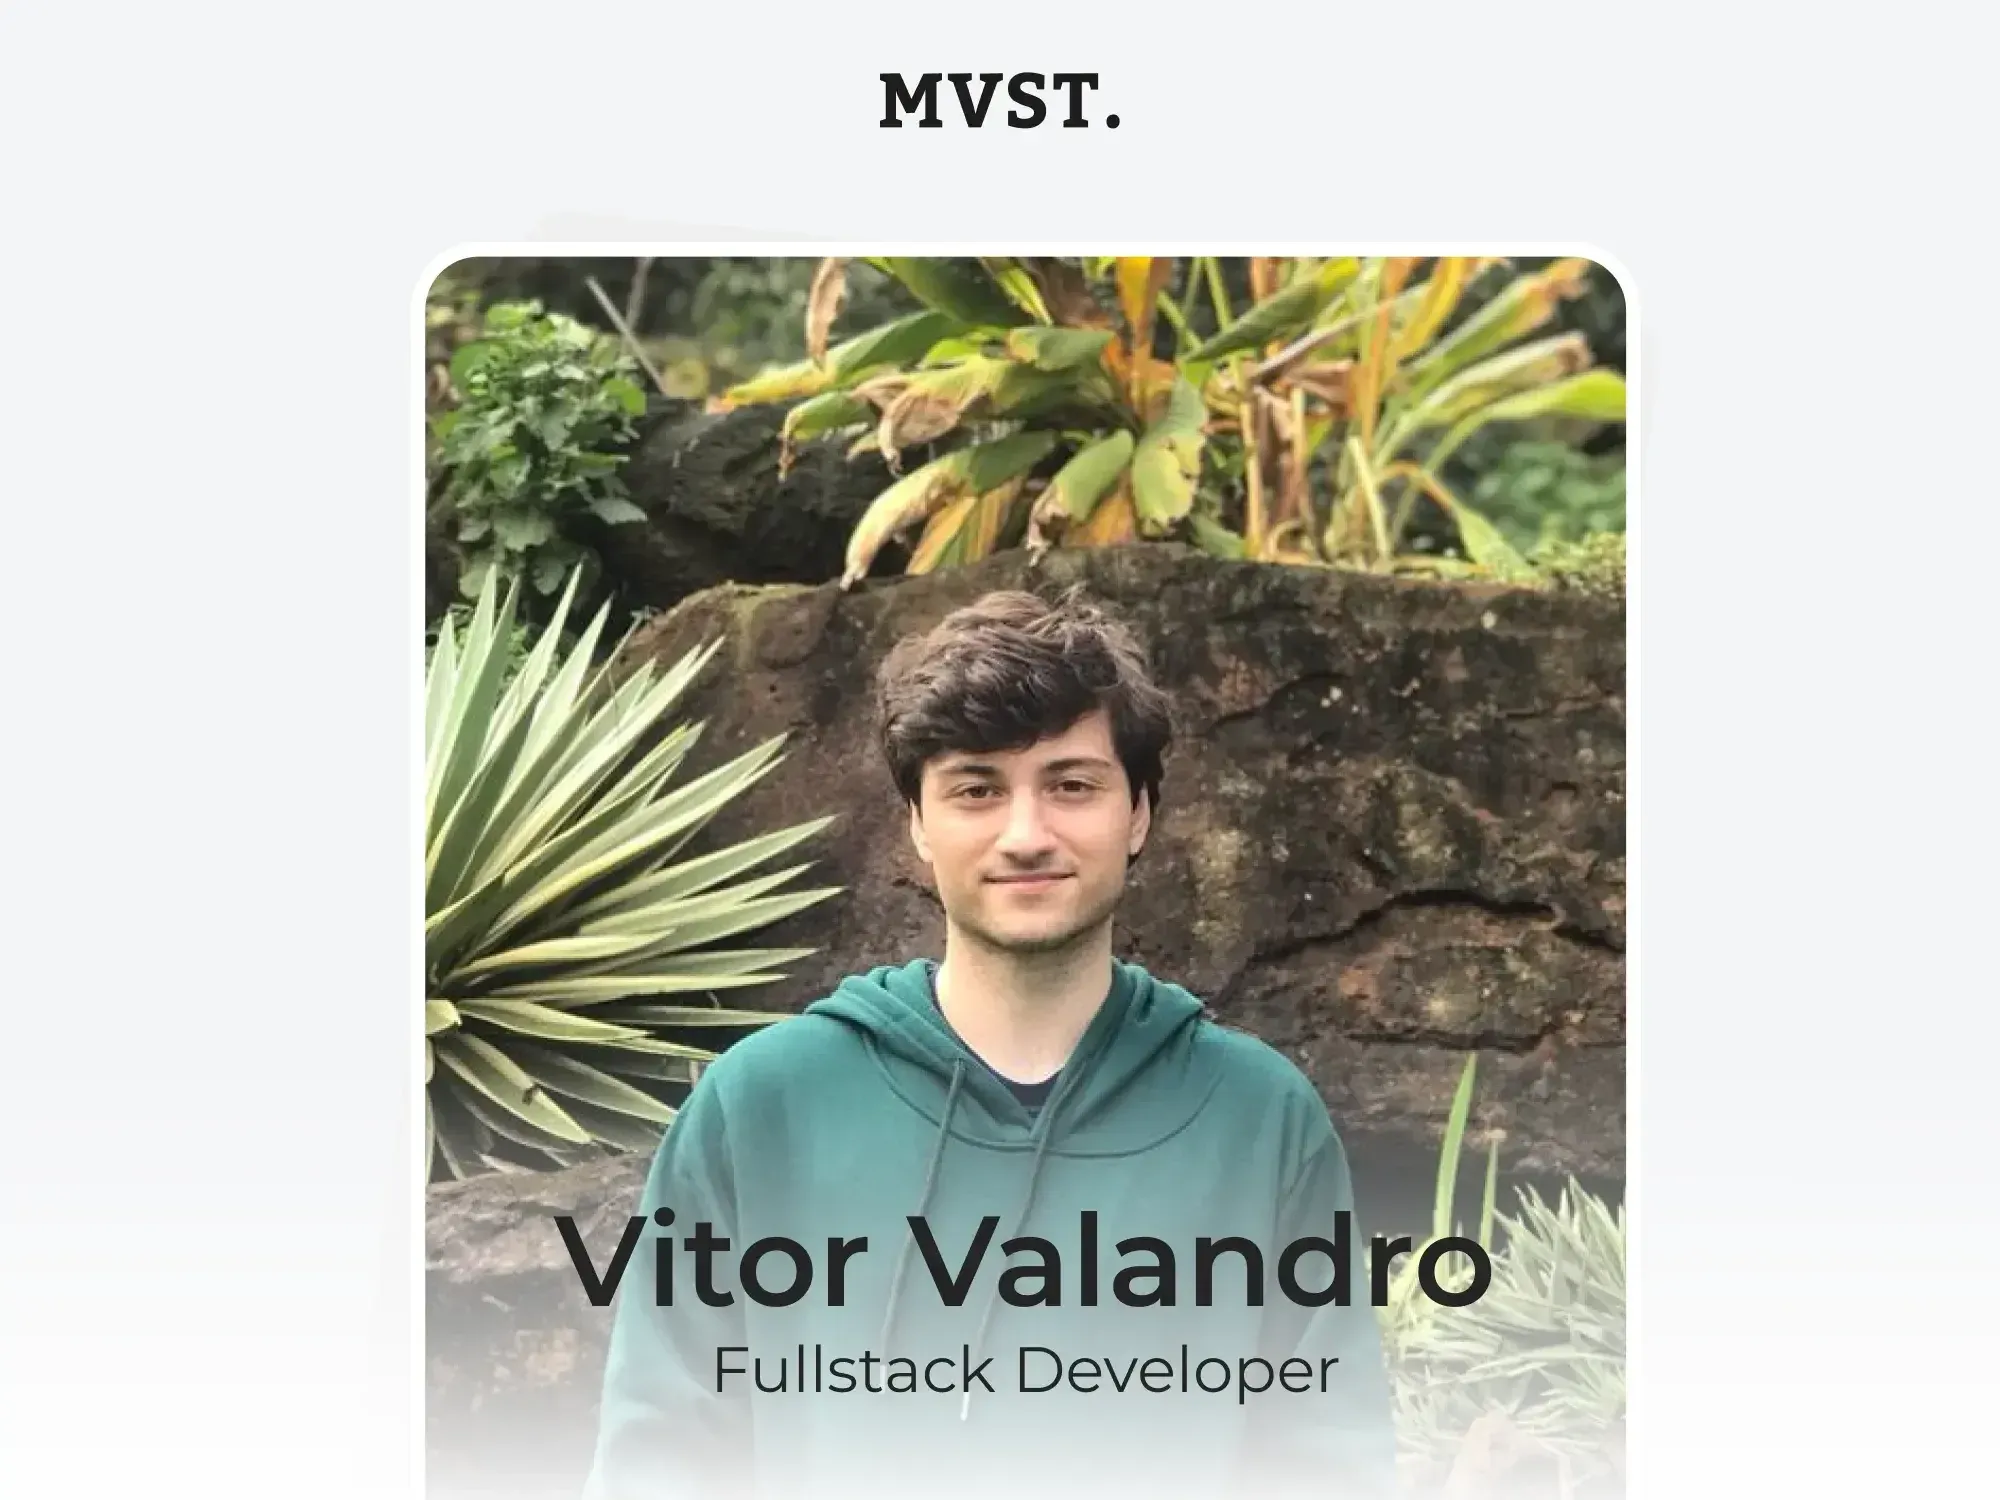 Welcome to MVST, Vitor!